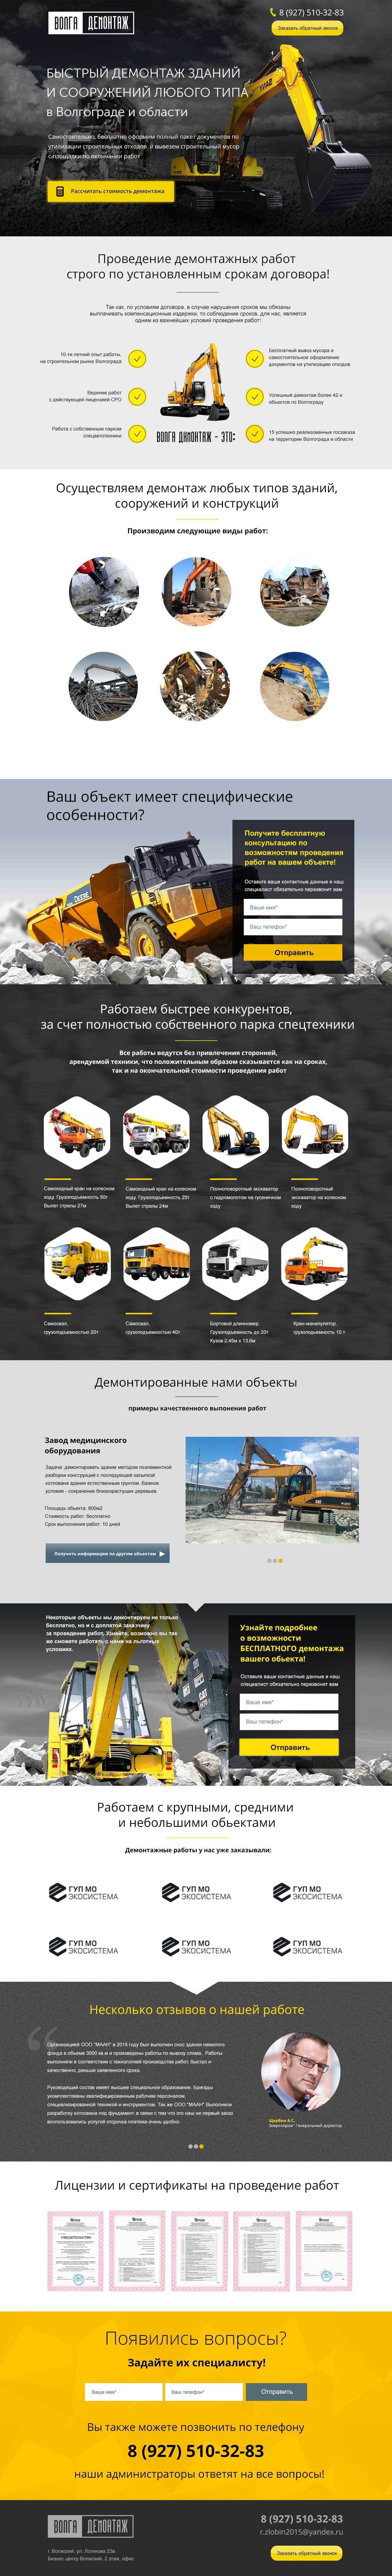 Дизайн сайта Волга Демонтаж. Разработка лендинга от агентства optimism.ru